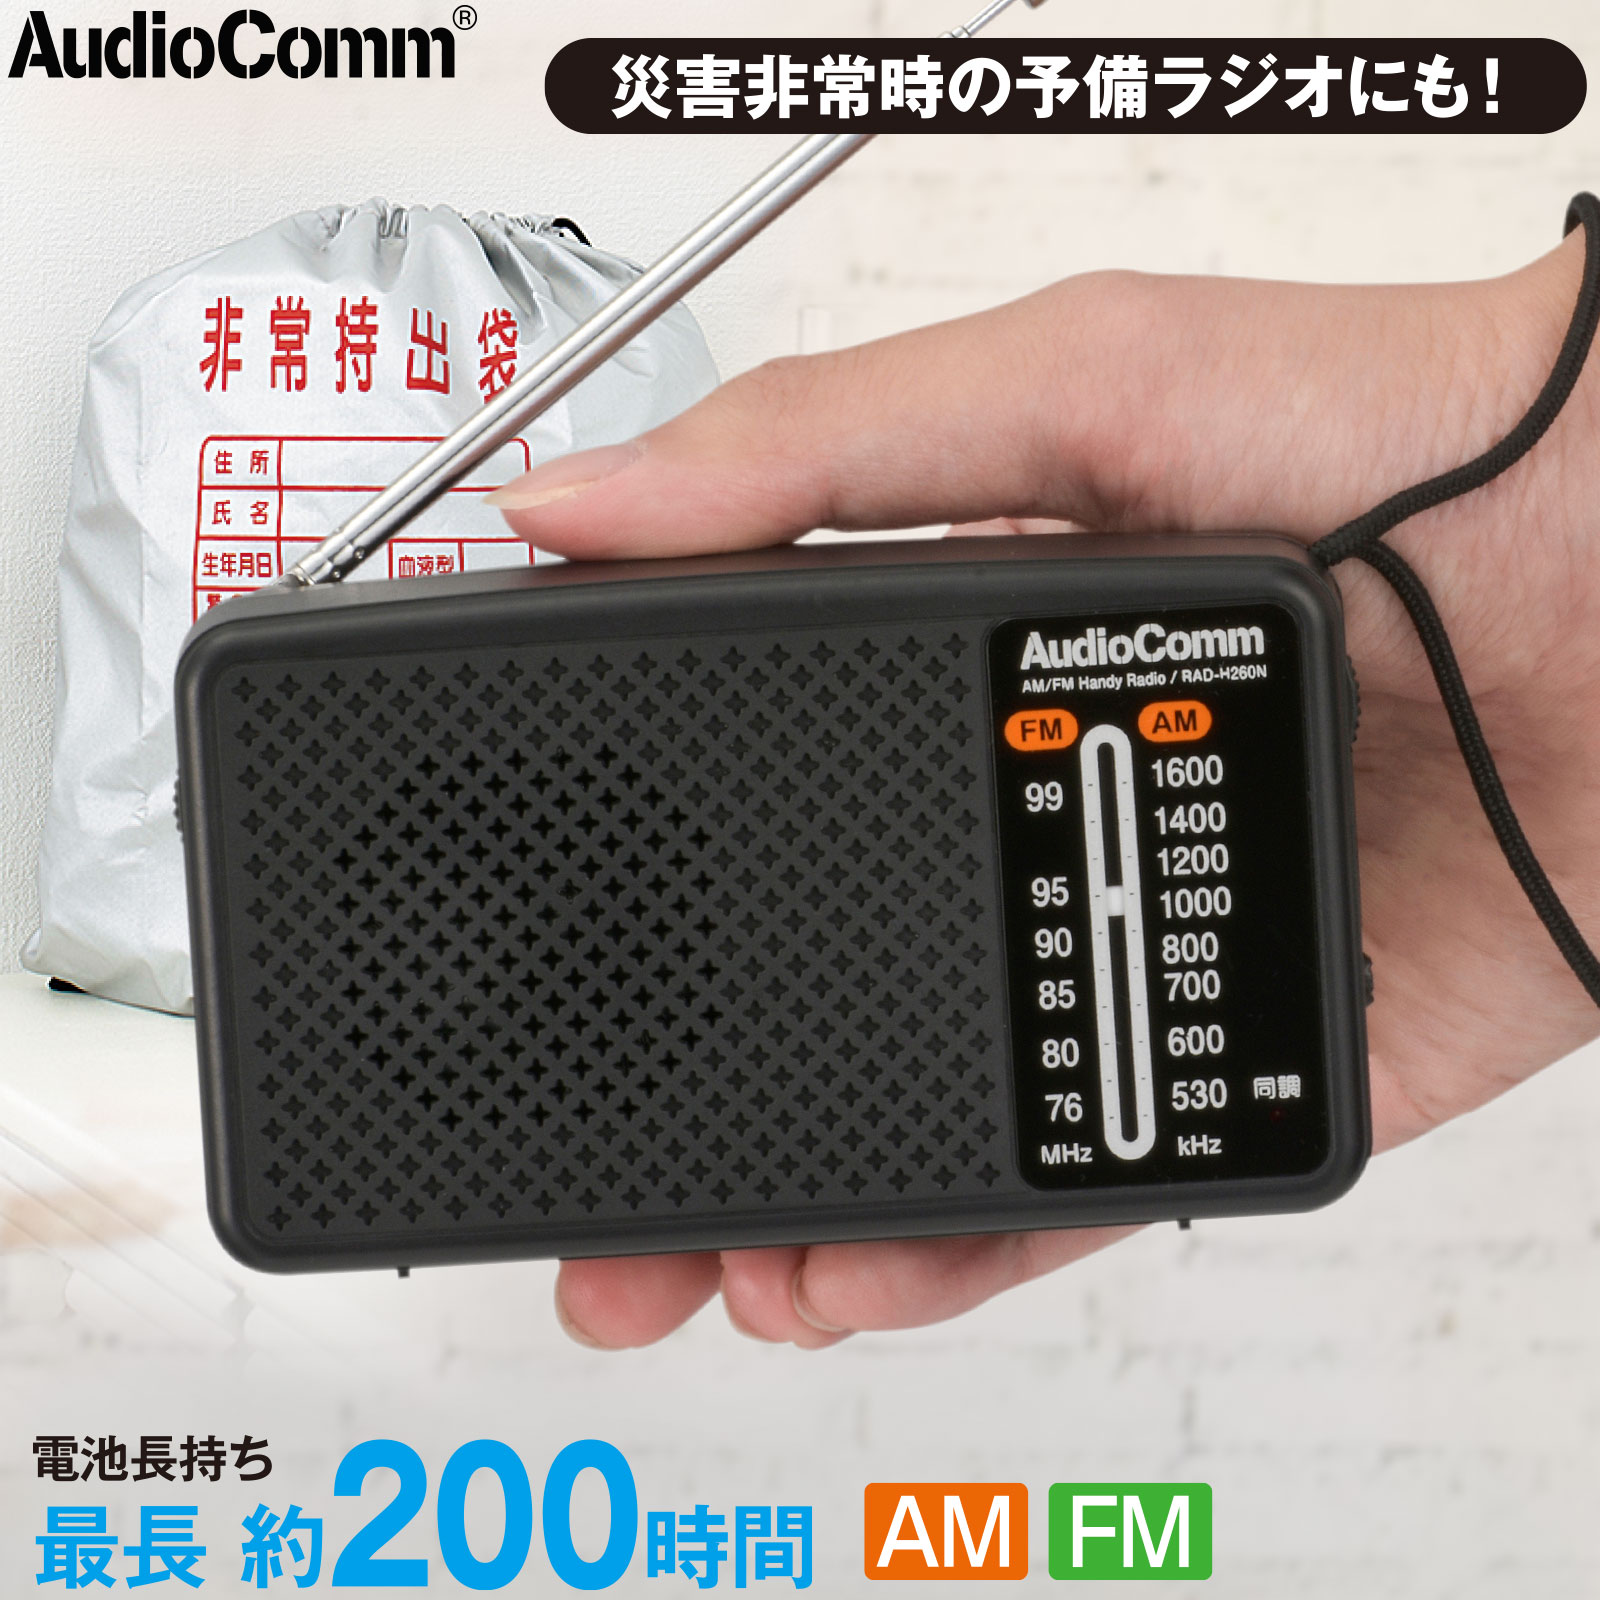 AudioCommスタミナハンディラジオ [品番]03-5530